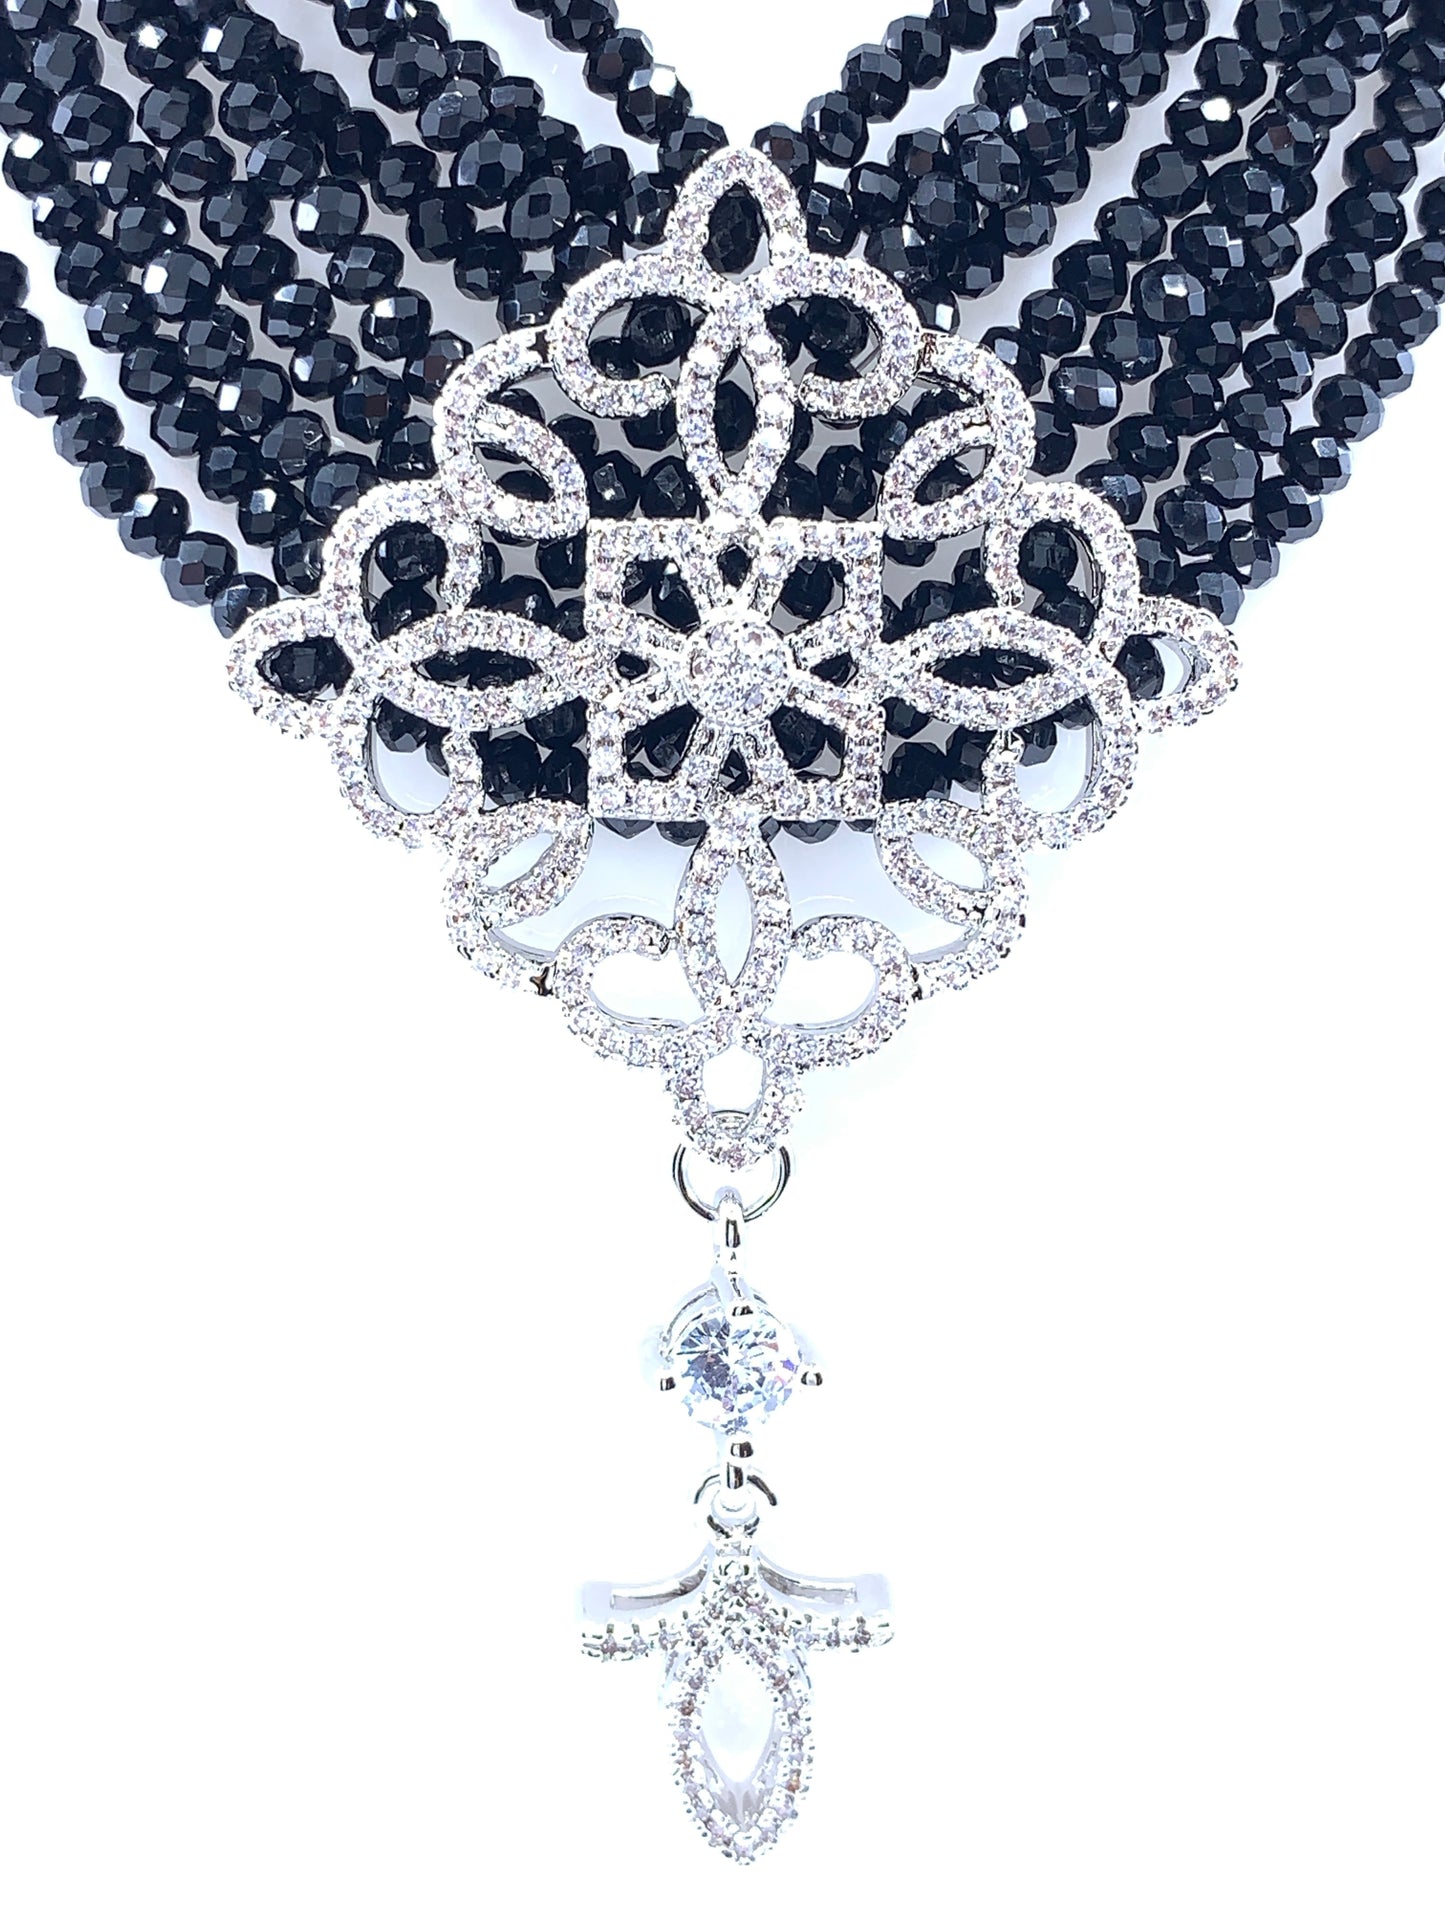 Elegant Austrian Crystal Necklace